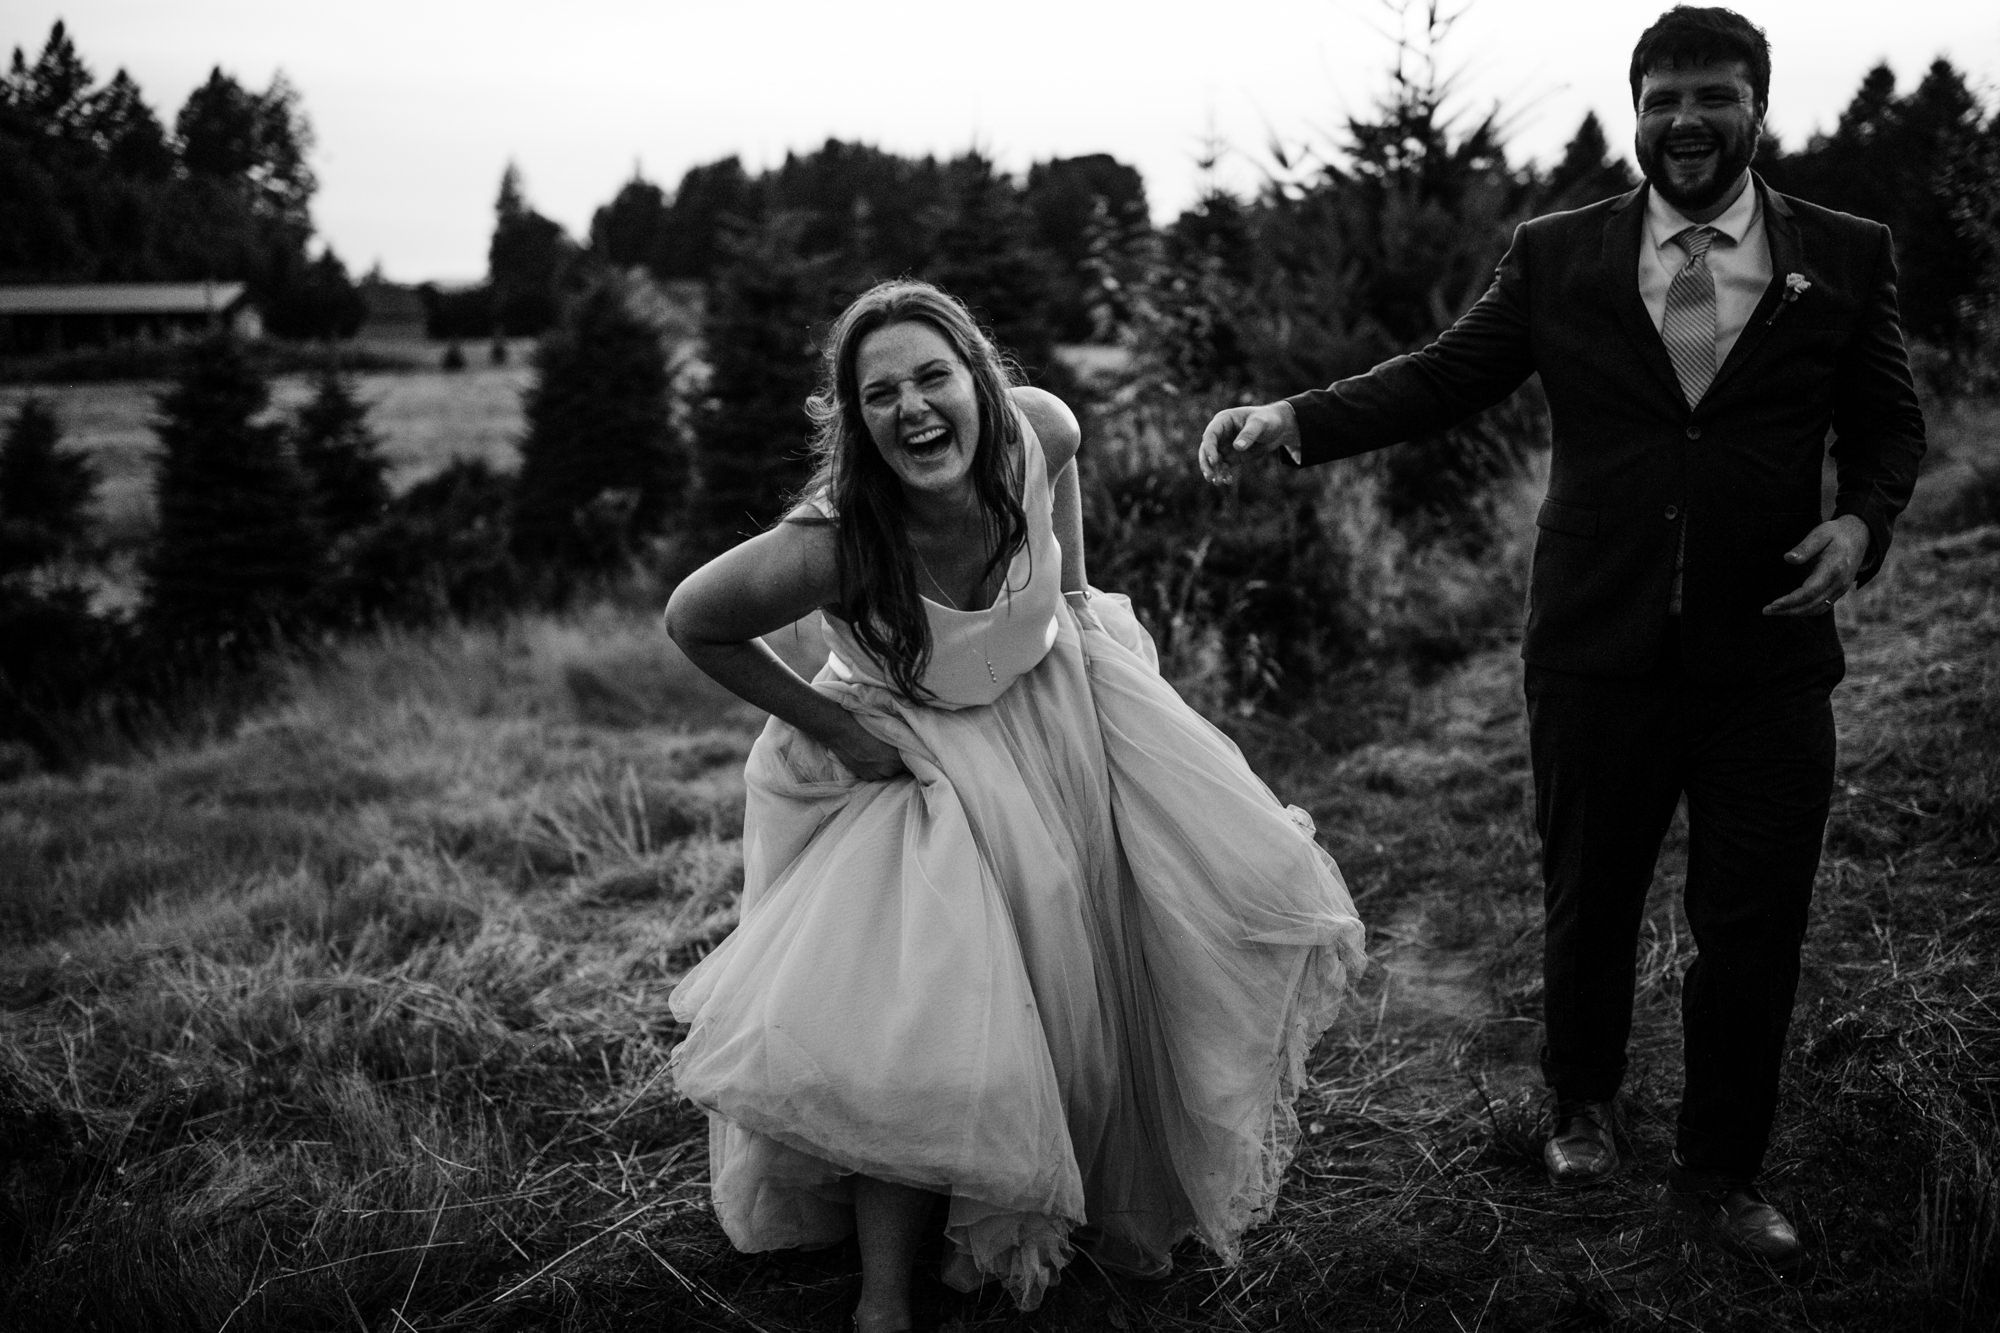 kati + joe's riverside wedding | adeline farms in woodland, washington | washington adventure wedding photographer | the hearnes adventure photography | www.thehearnes.com